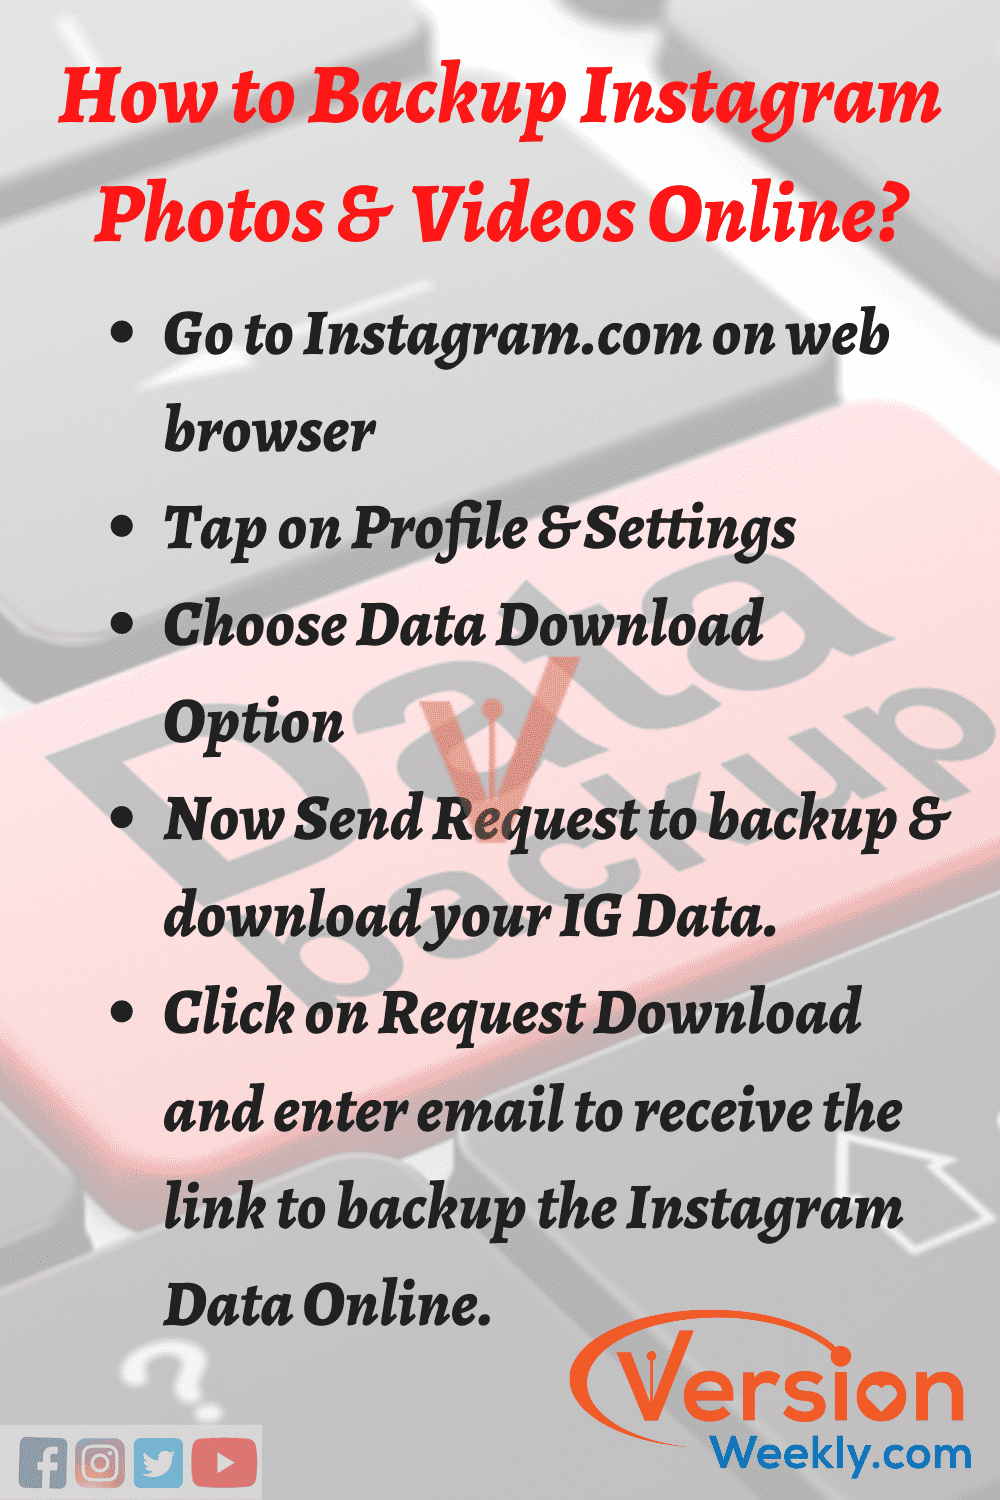 Steps for Instagram Photos & Videos BackUp